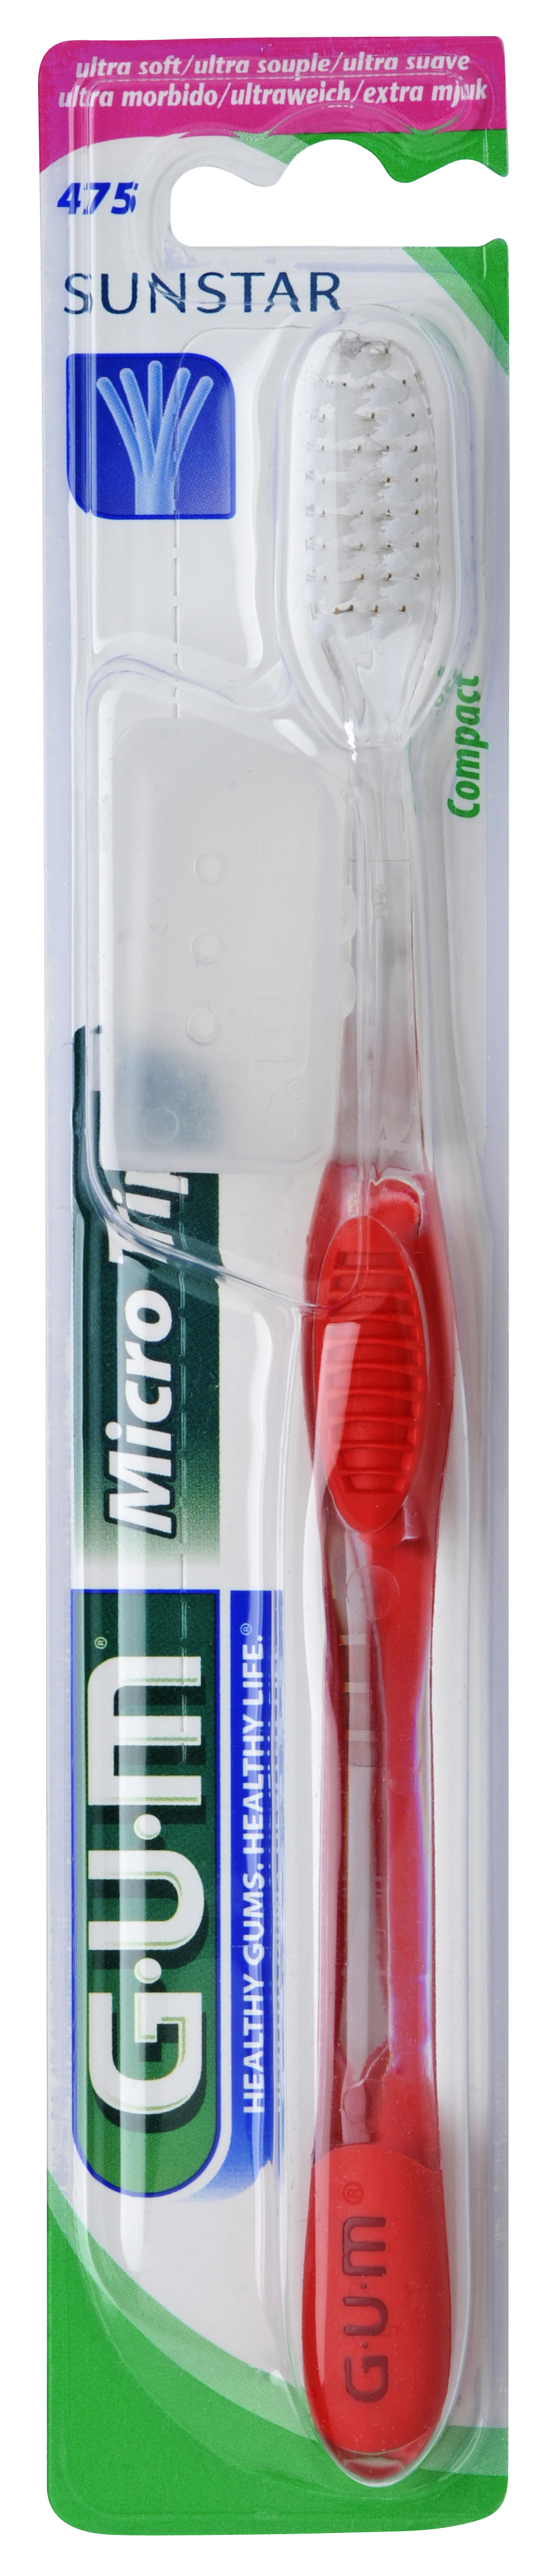 475 G·U·M Micro Tip Toothbrush Sensitive Compact : แปรงสีฟันชนิดปลายขนแปรงขนาดเล็ก